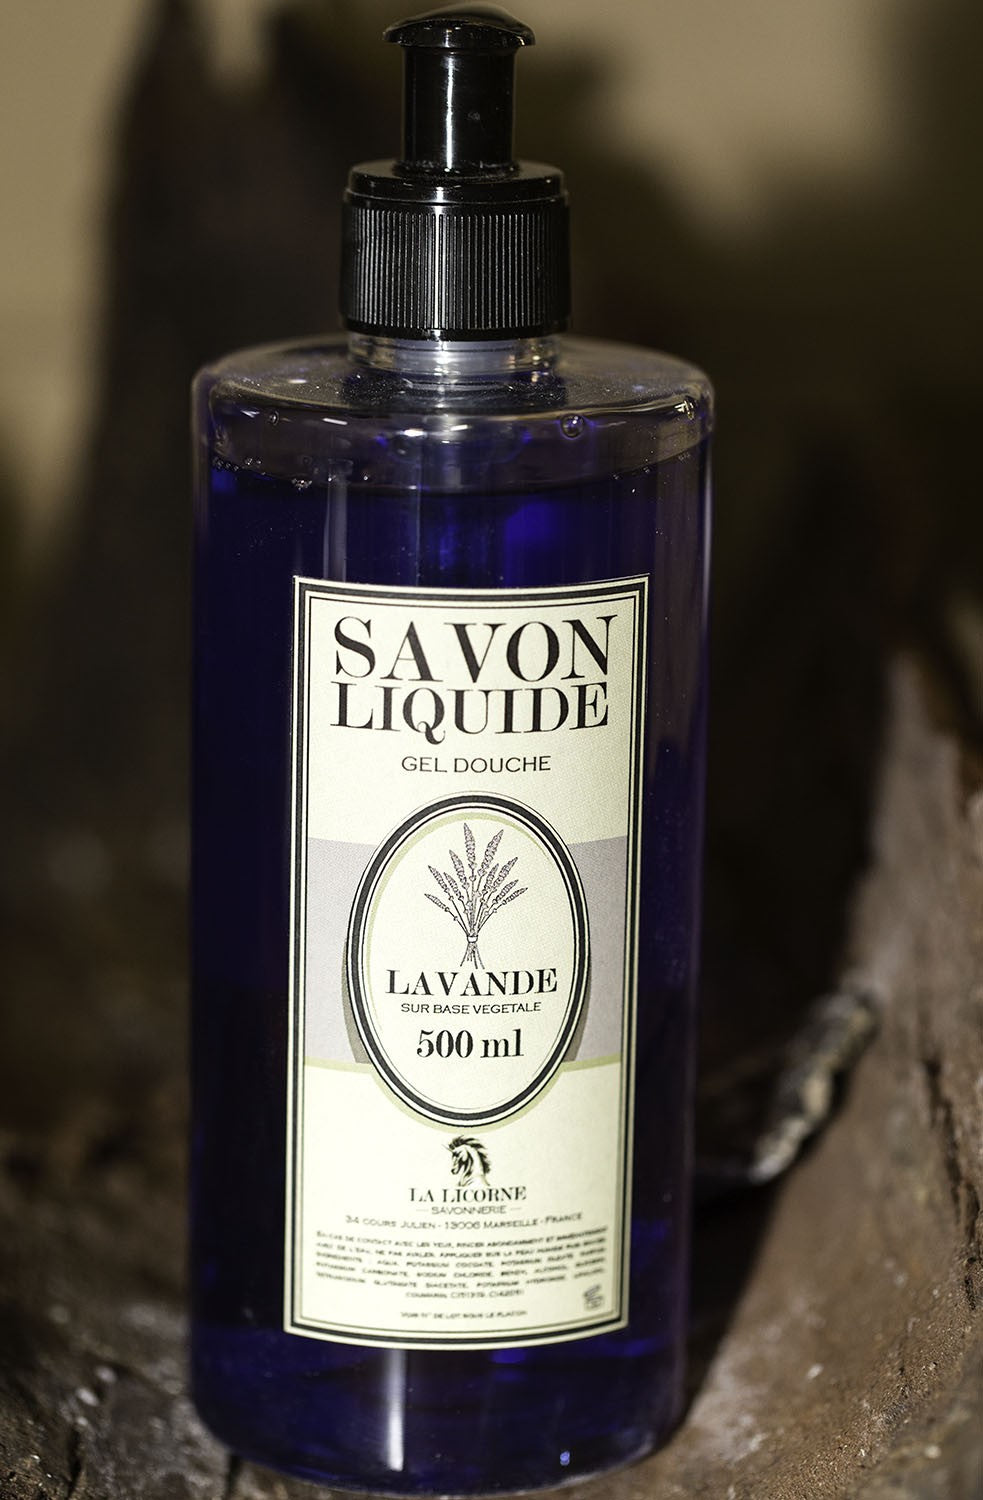 Liquid soap/shower gel - 500ml Lavande